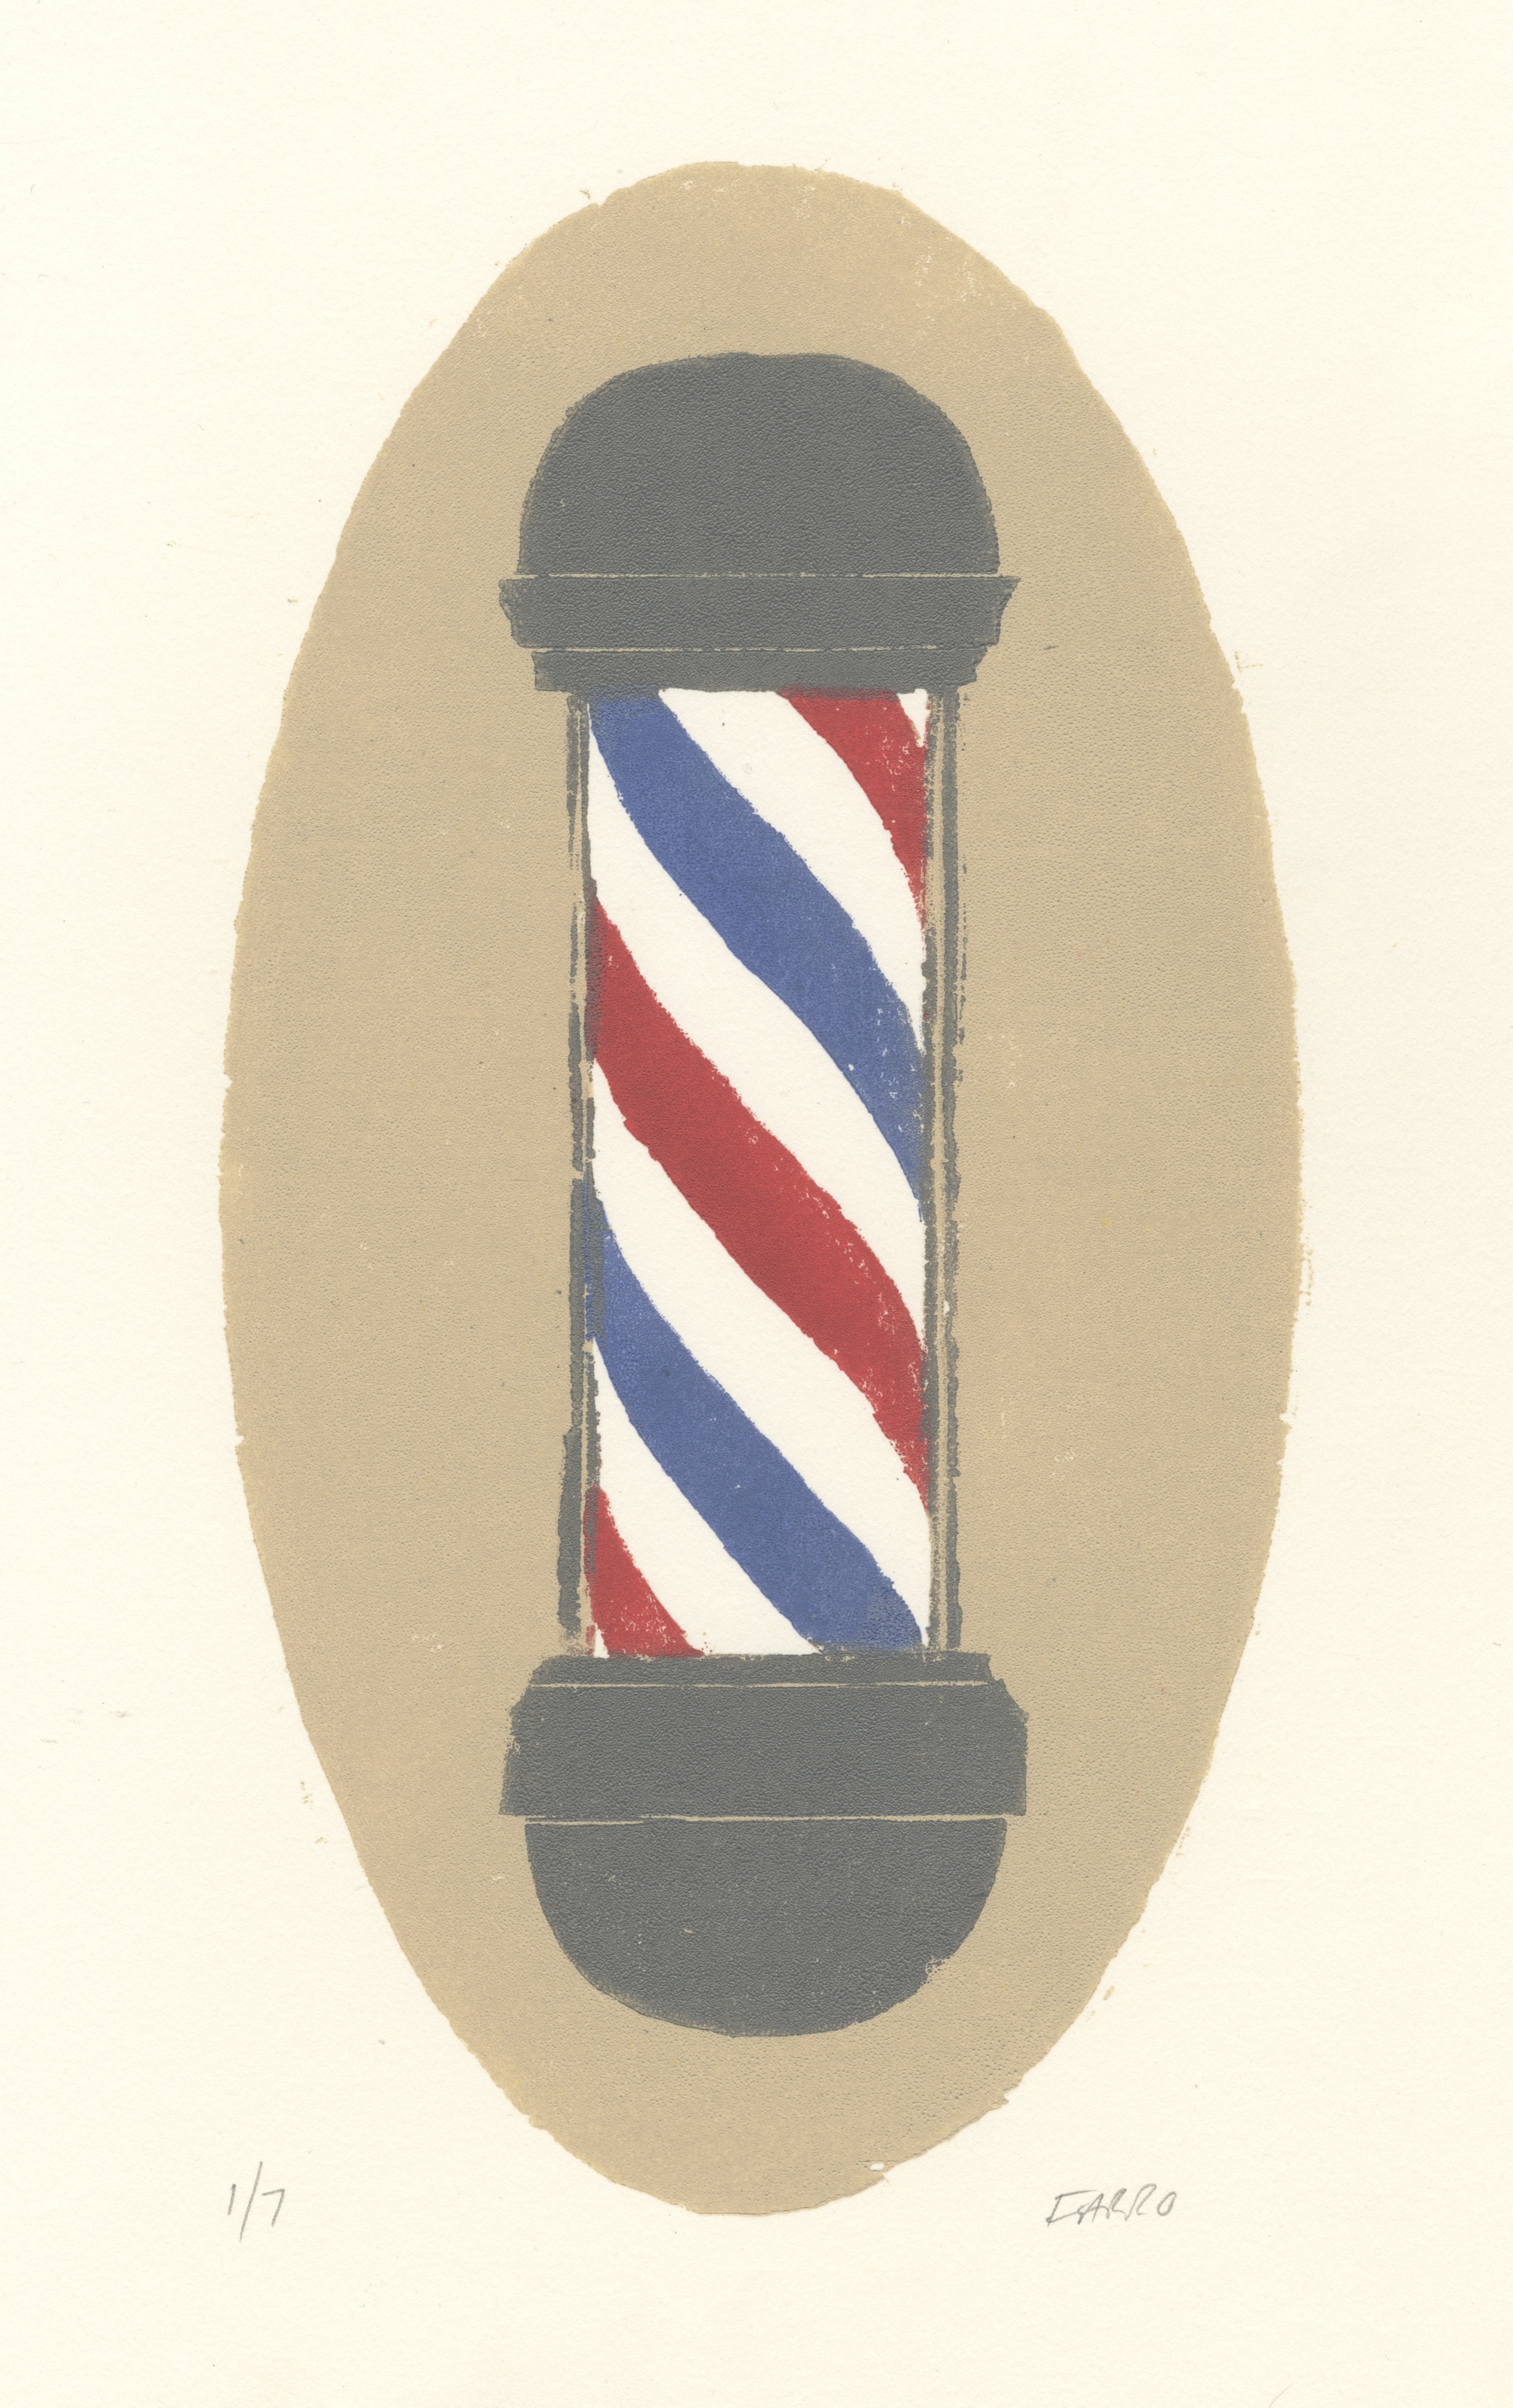   barber pole   woodblock print  edition of 7  5.5x10.5"  2012 